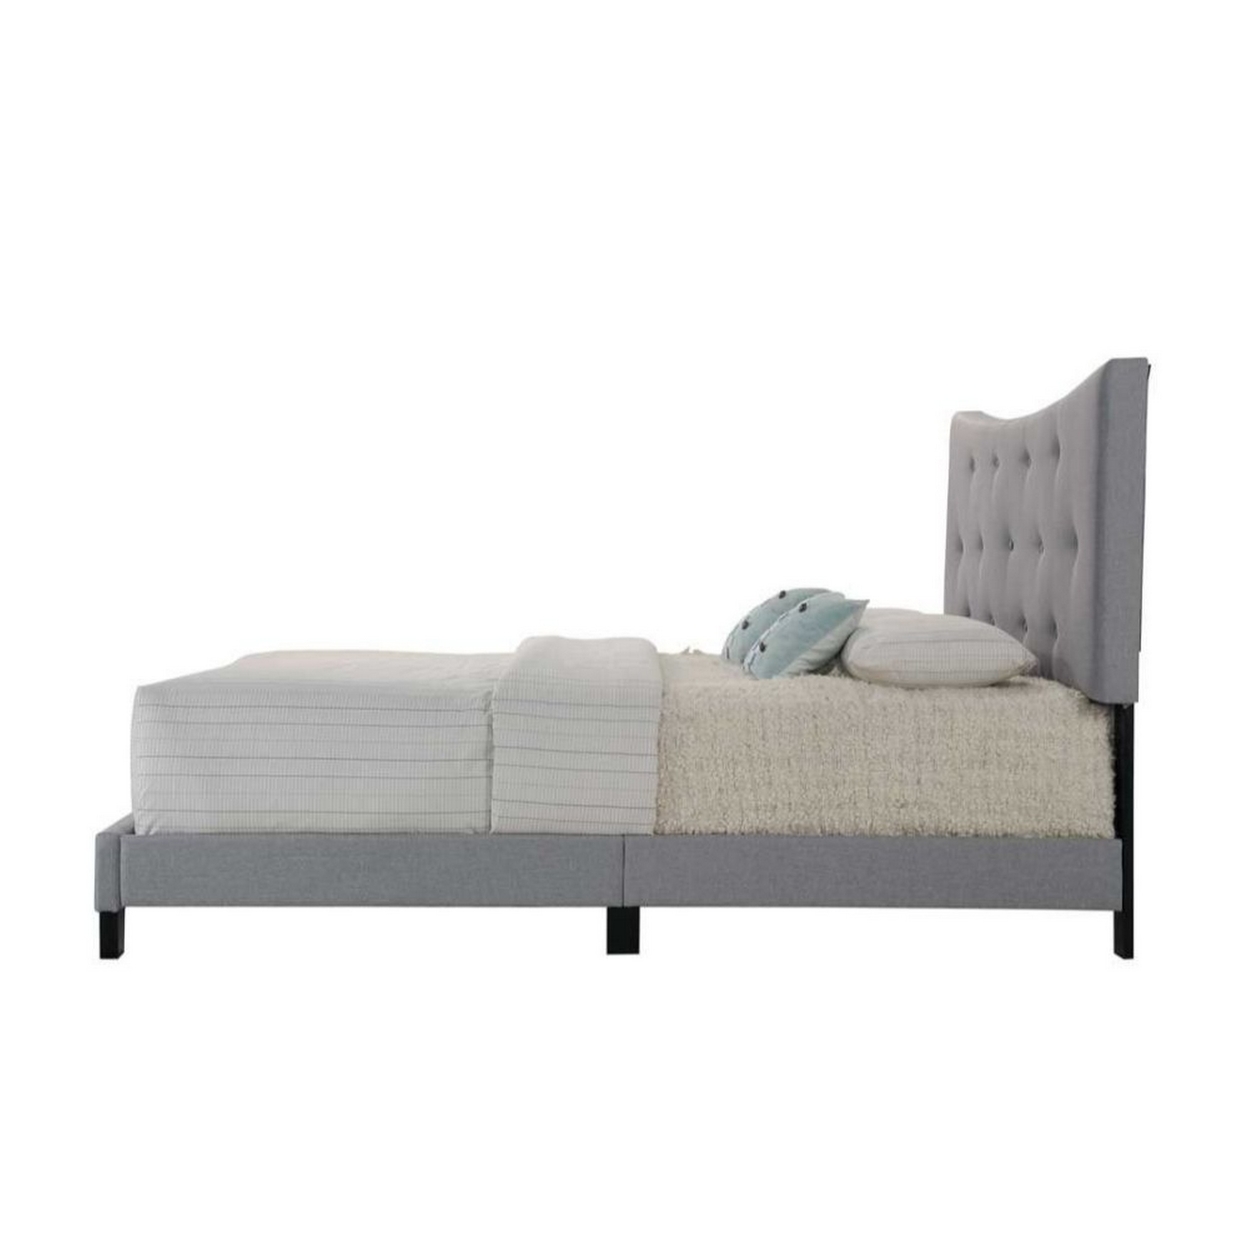 ACME Venacha Upholstered Platform Queen Bed, Gray Fabric - image 2 of 6